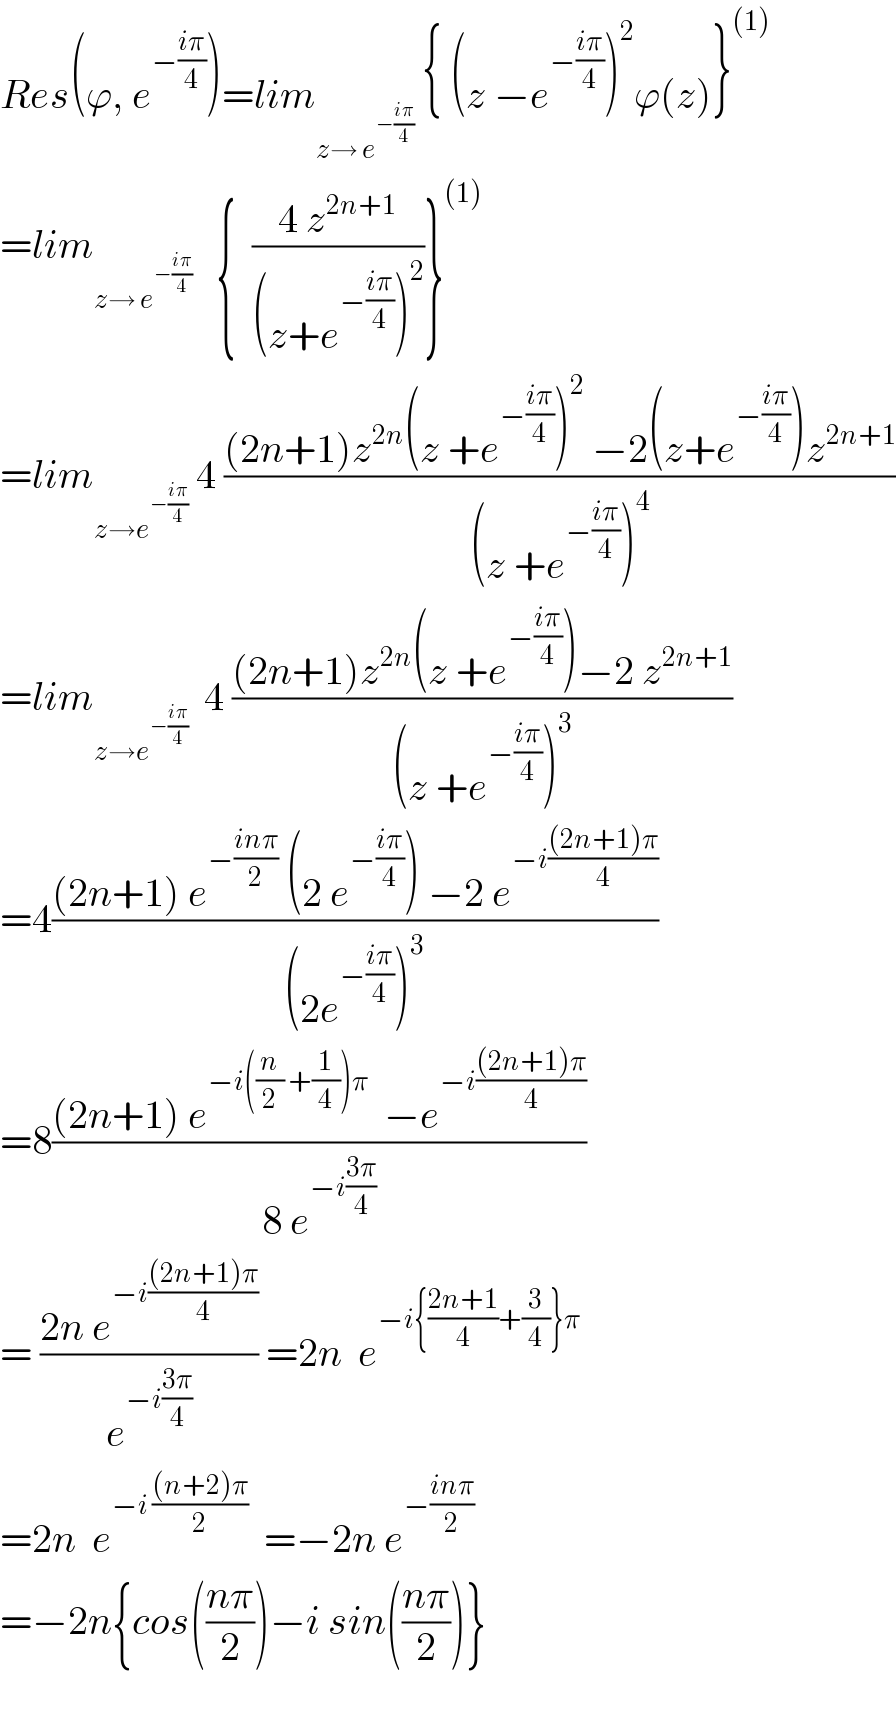 Res(ϕ, e^(−((iπ)/4)) )=lim_(z→ e^(−((iπ)/4)) )  { (z −e^(−((iπ)/4)) )^2 ϕ(z)}^((1))   =lim_(z→ e^(−((iπ)/4)) )    {  ((4 z^(2n+1) )/((z+e^(−((iπ)/4)) )^2 ))}^((1))   =lim_(z→e^(−((iπ)/4)) )  4 (((2n+1)z^(2n) (z +e^(−((iπ)/4)) )^2  −2(z+e^(−((iπ)/4)) )z^(2n+1) )/((z +e^(−((iπ)/4)) )^4 ))  =lim_(z→e^(−((iπ)/4)) )   4 (((2n+1)z^(2n) (z +e^(−((iπ)/4)) )−2 z^(2n+1) )/((z +e^(−((iπ)/4)) )^3 ))  =4(((2n+1) e^(−((inπ)/2))  (2 e^(−((iπ)/4)) ) −2 e^(−i(((2n+1)π)/4)) )/((2e^(−((iπ)/4)) )^3 ))  =8(((2n+1) e^(−i((n/2) +(1/4))π)   −e^(−i(((2n+1)π)/4)) )/(8 e^(−i((3π)/4)) ))  = ((2n e^(−i(((2n+1)π)/4)) )/e^(−i((3π)/4)) ) =2n  e^(−i{((2n+1)/4)+(3/4)}π)   =2n  e^(−i (((n+2)π)/2))   =−2n e^(−((inπ)/2))   =−2n{cos(((nπ)/2))−i sin(((nπ)/2))}    